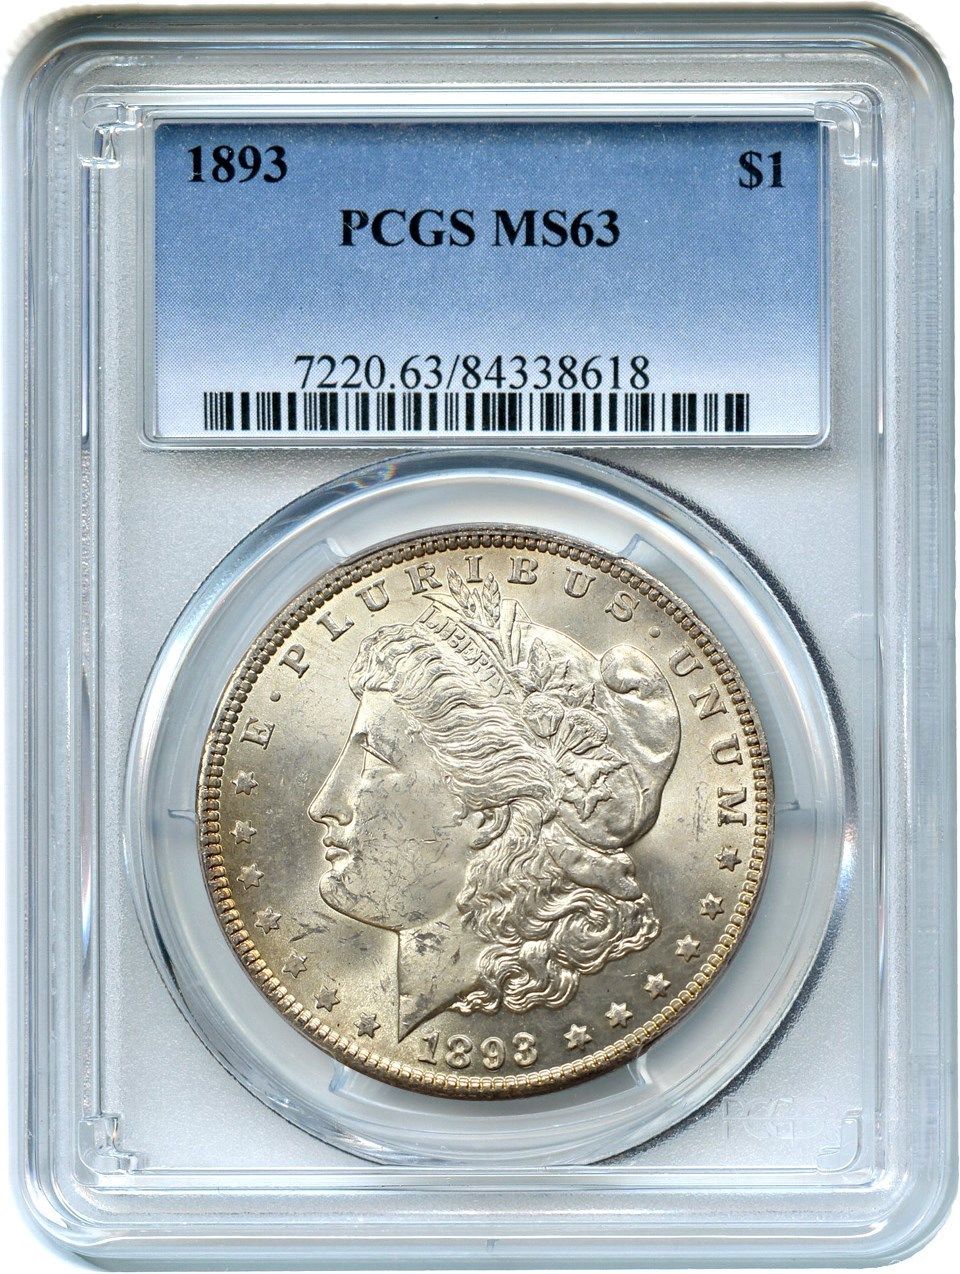 1893 $1 PCGS MS63 - Better Date P-Mint - Morgan Silver Dollar